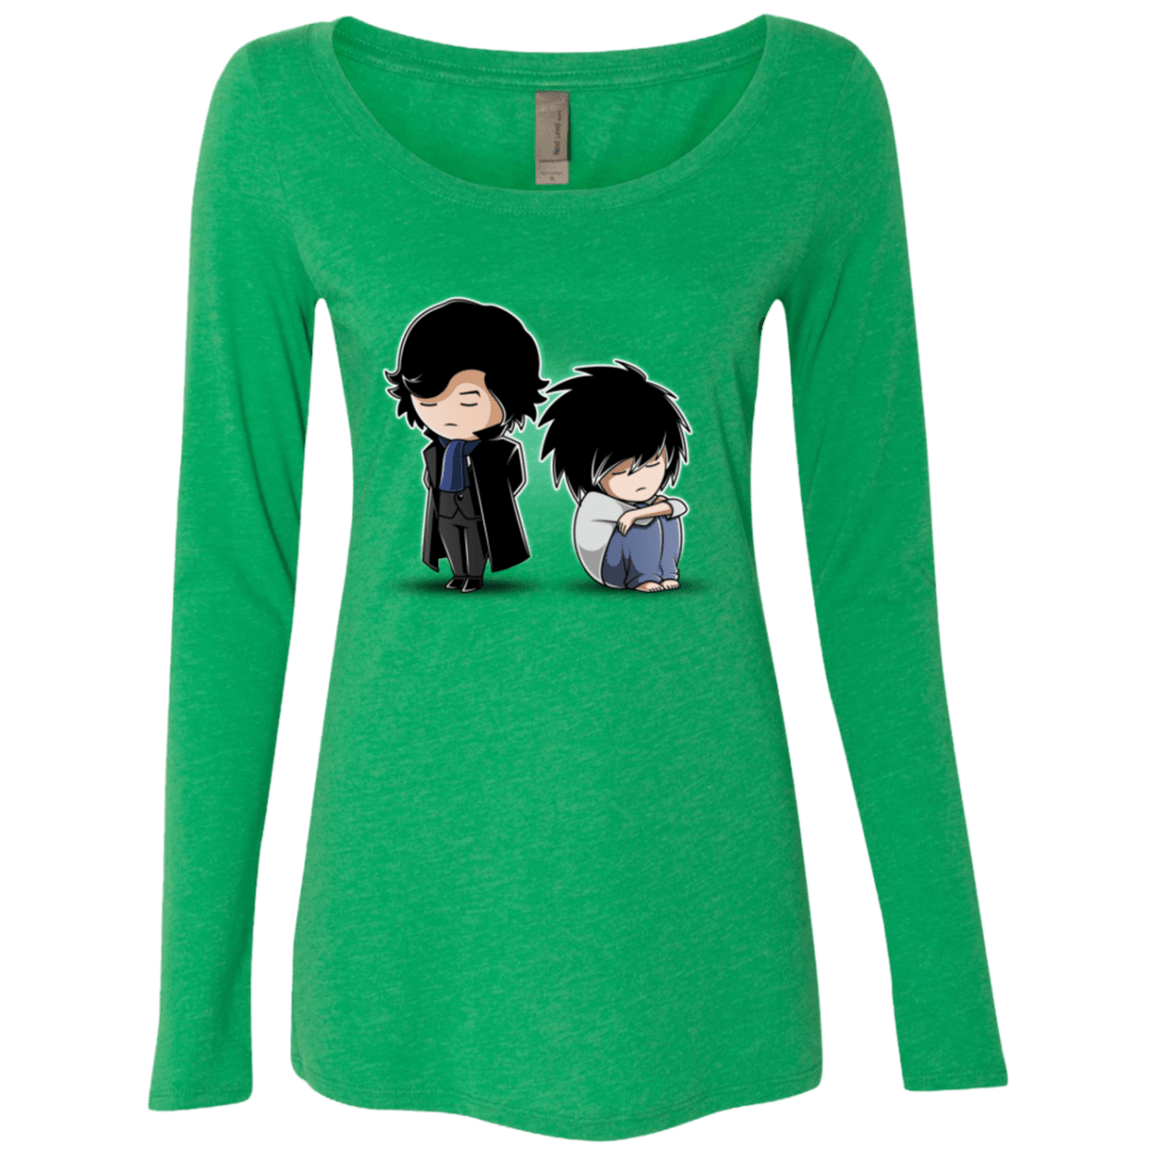 T-Shirts Envy / Small SherLock2 Women's Triblend Long Sleeve Shirt